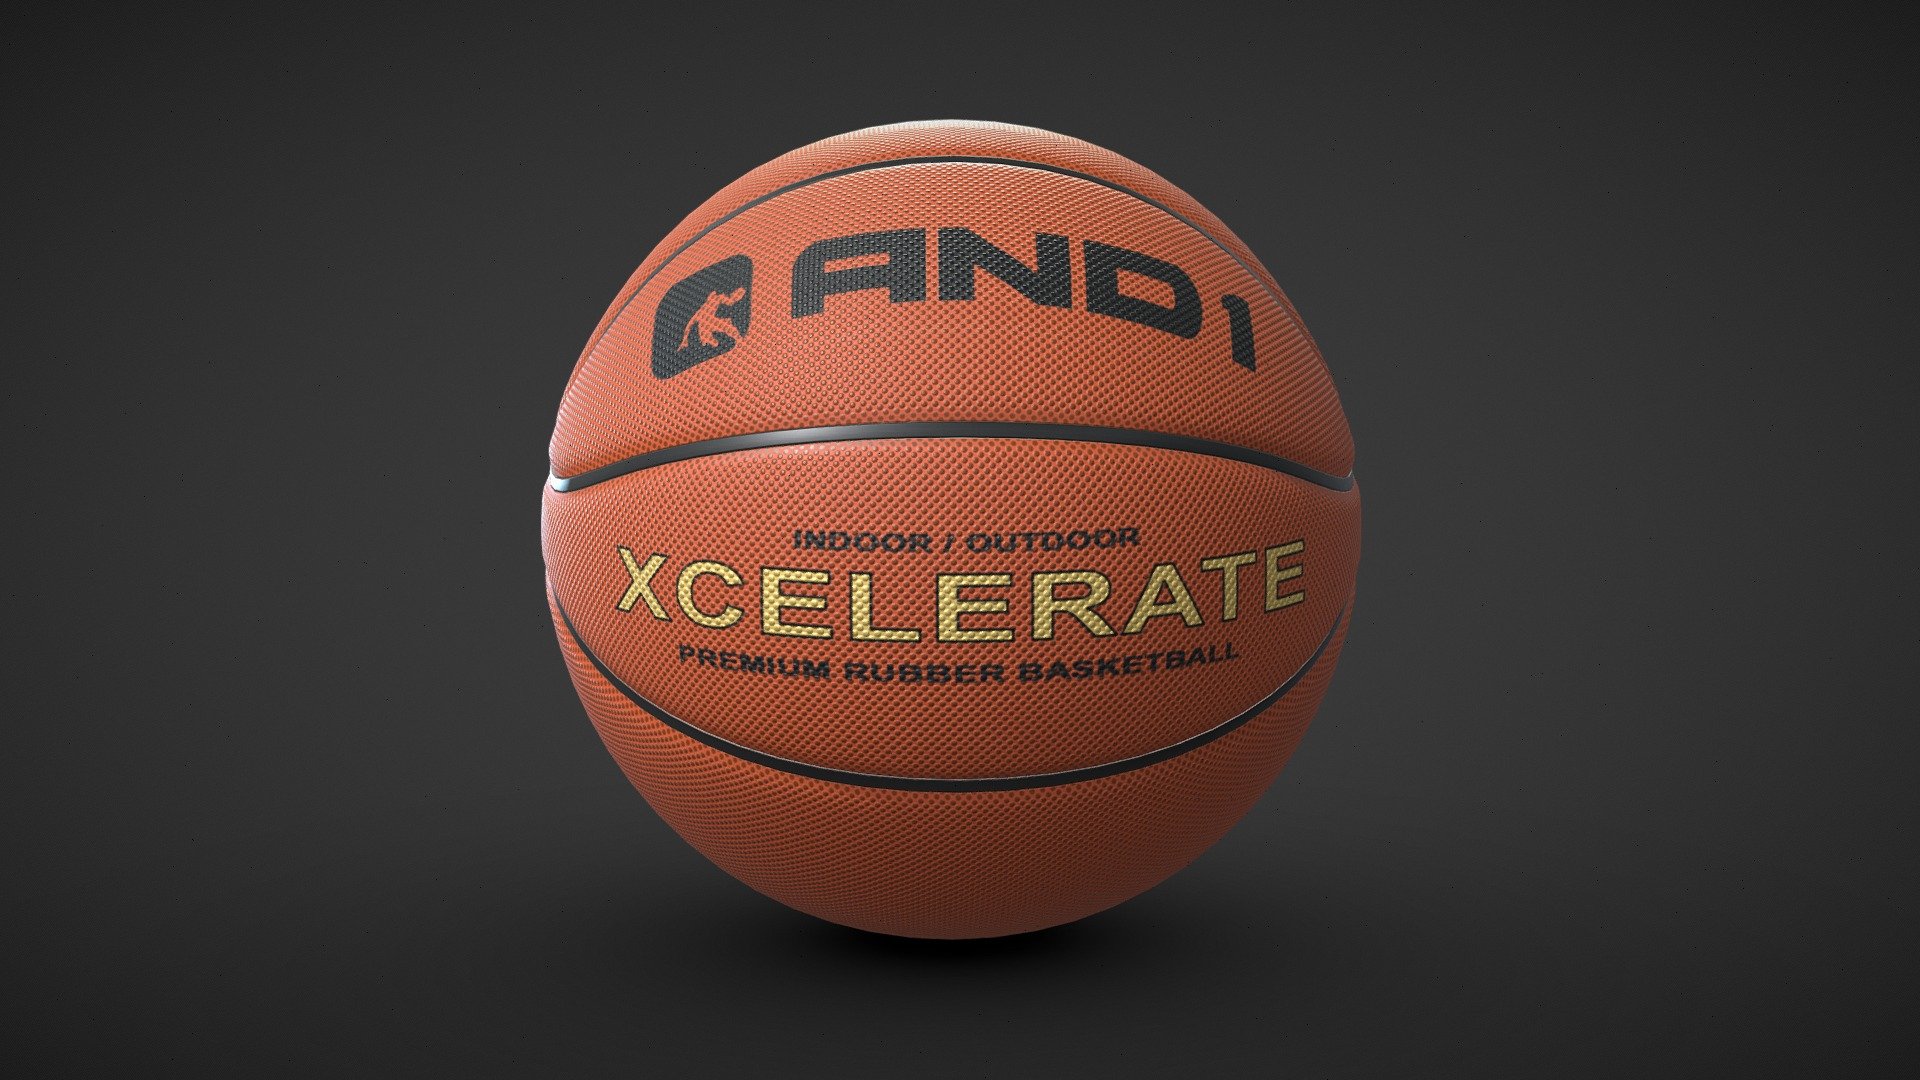 BASKETBALL AND1 XCELERATE - BASKETBALL AND1 XCELERATE - Download Free 3D model by Mikhail Kadilnikov (@MikhailKadilnikov) 3d model